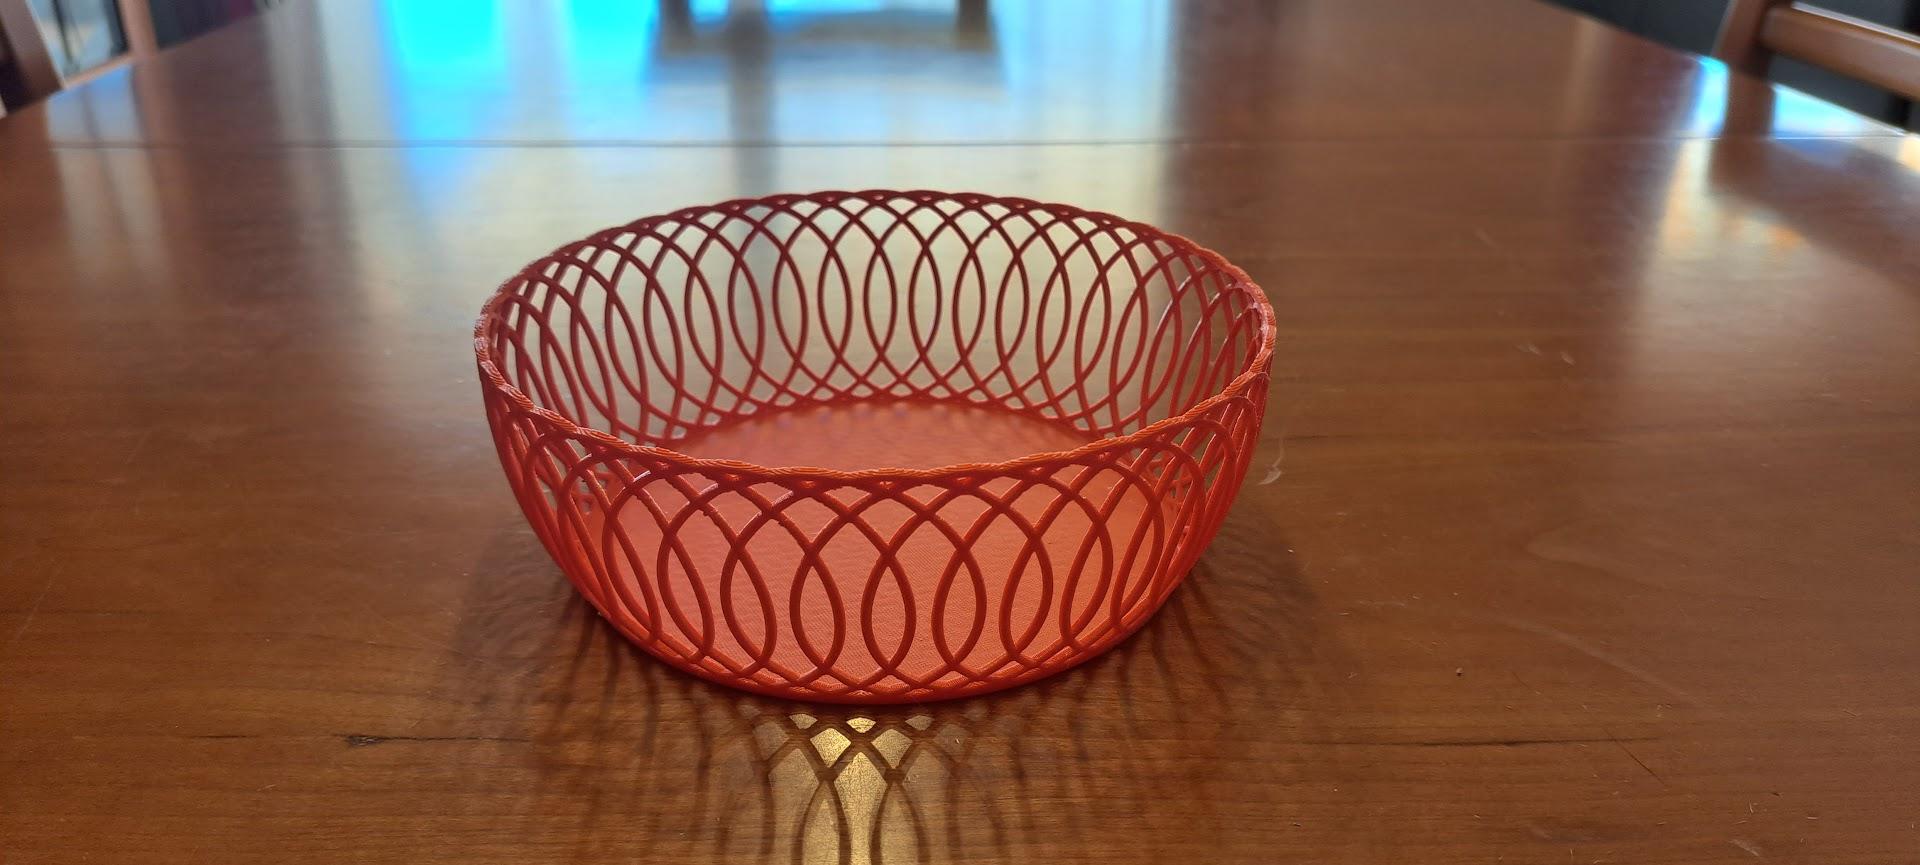 Decorative Basket #3 3d model